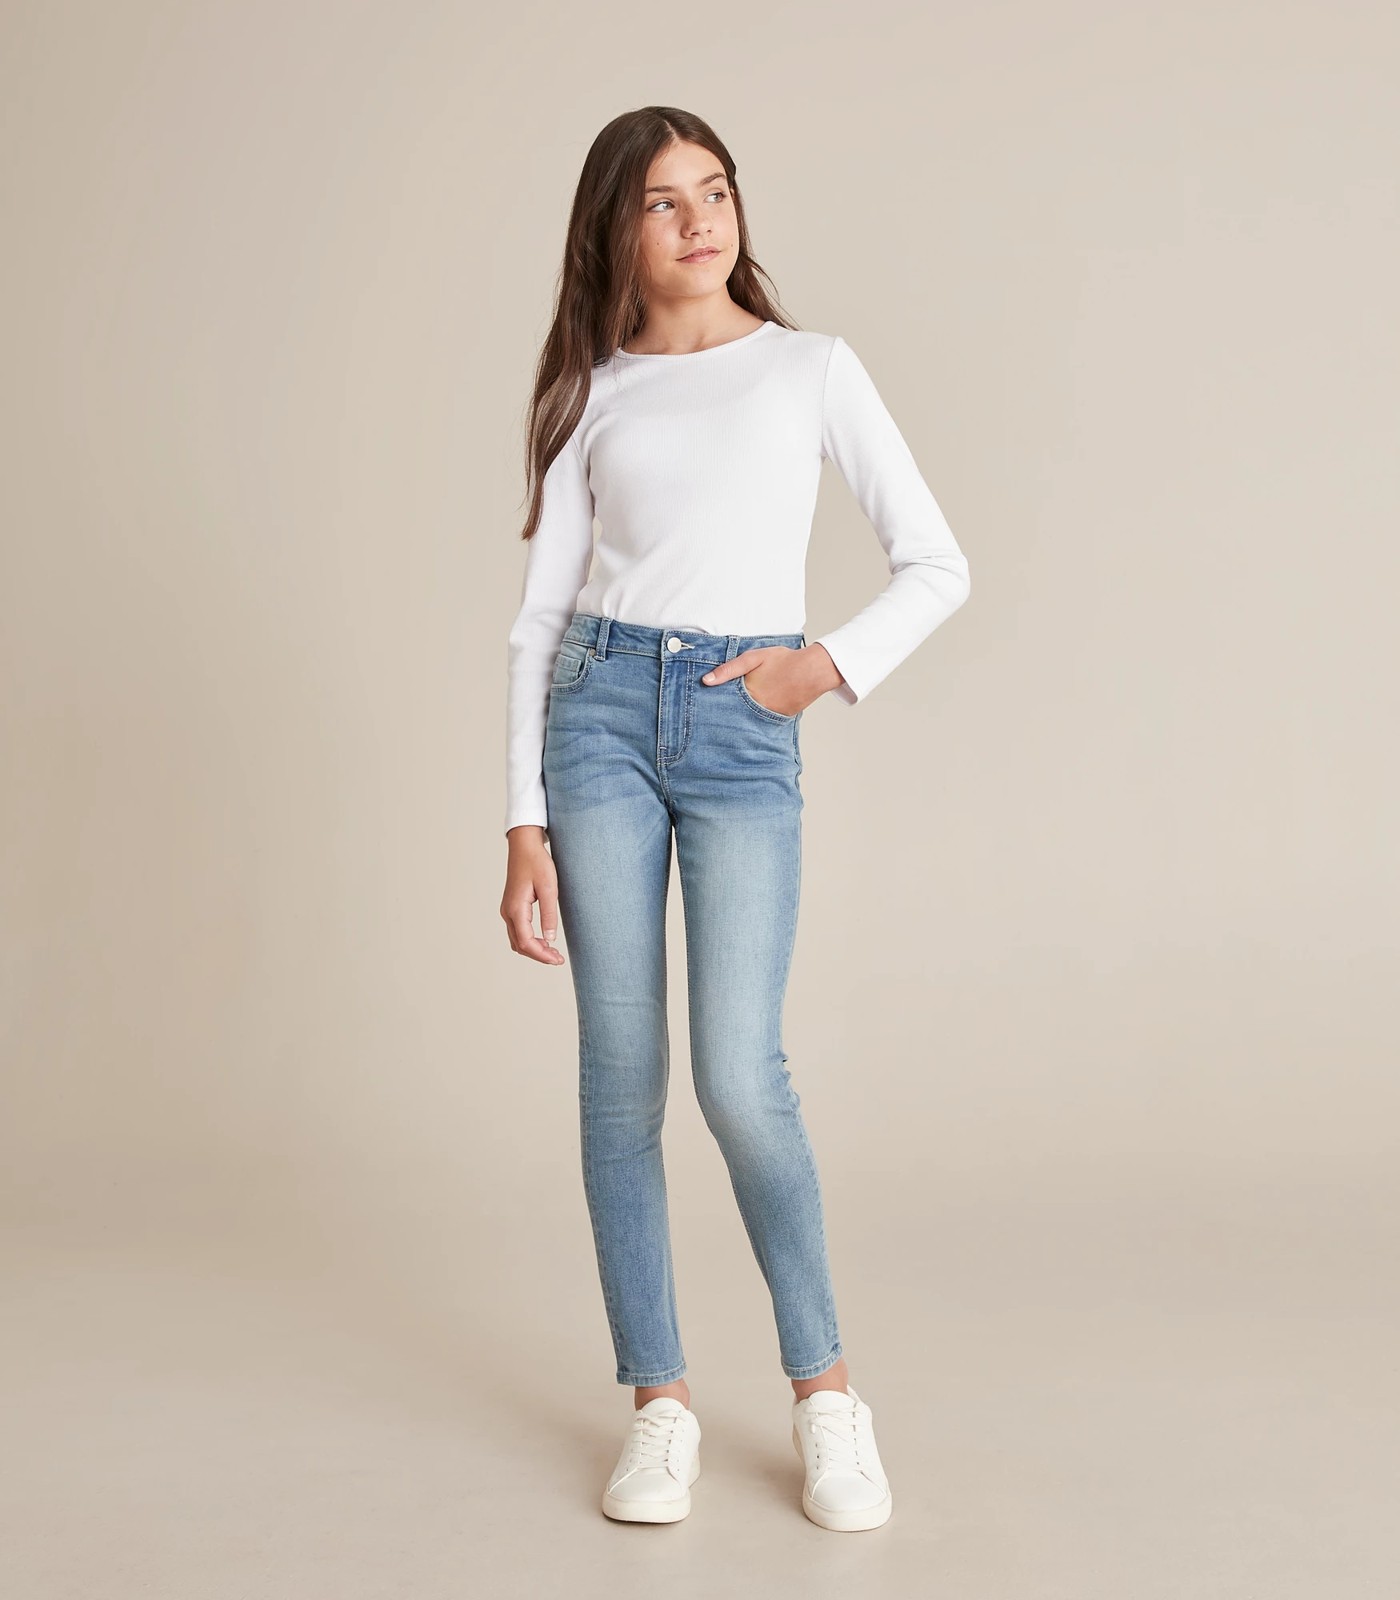 Girls Sophie Denim Fitted Jeans | Target Australia